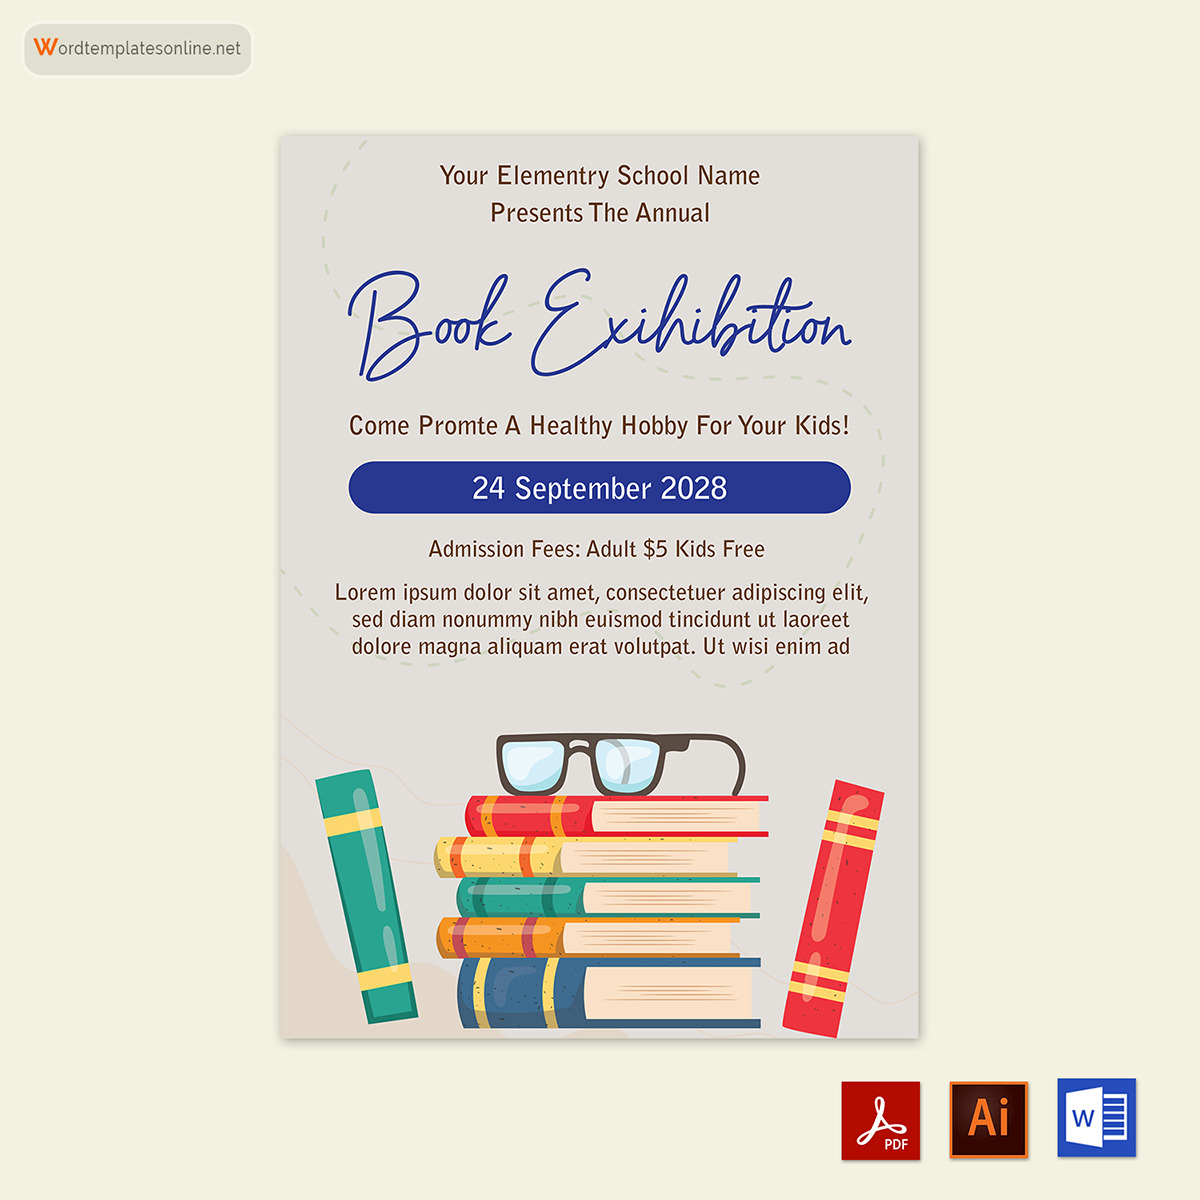 Book Club Flyer Templates - Free Word, PSD, AI Design